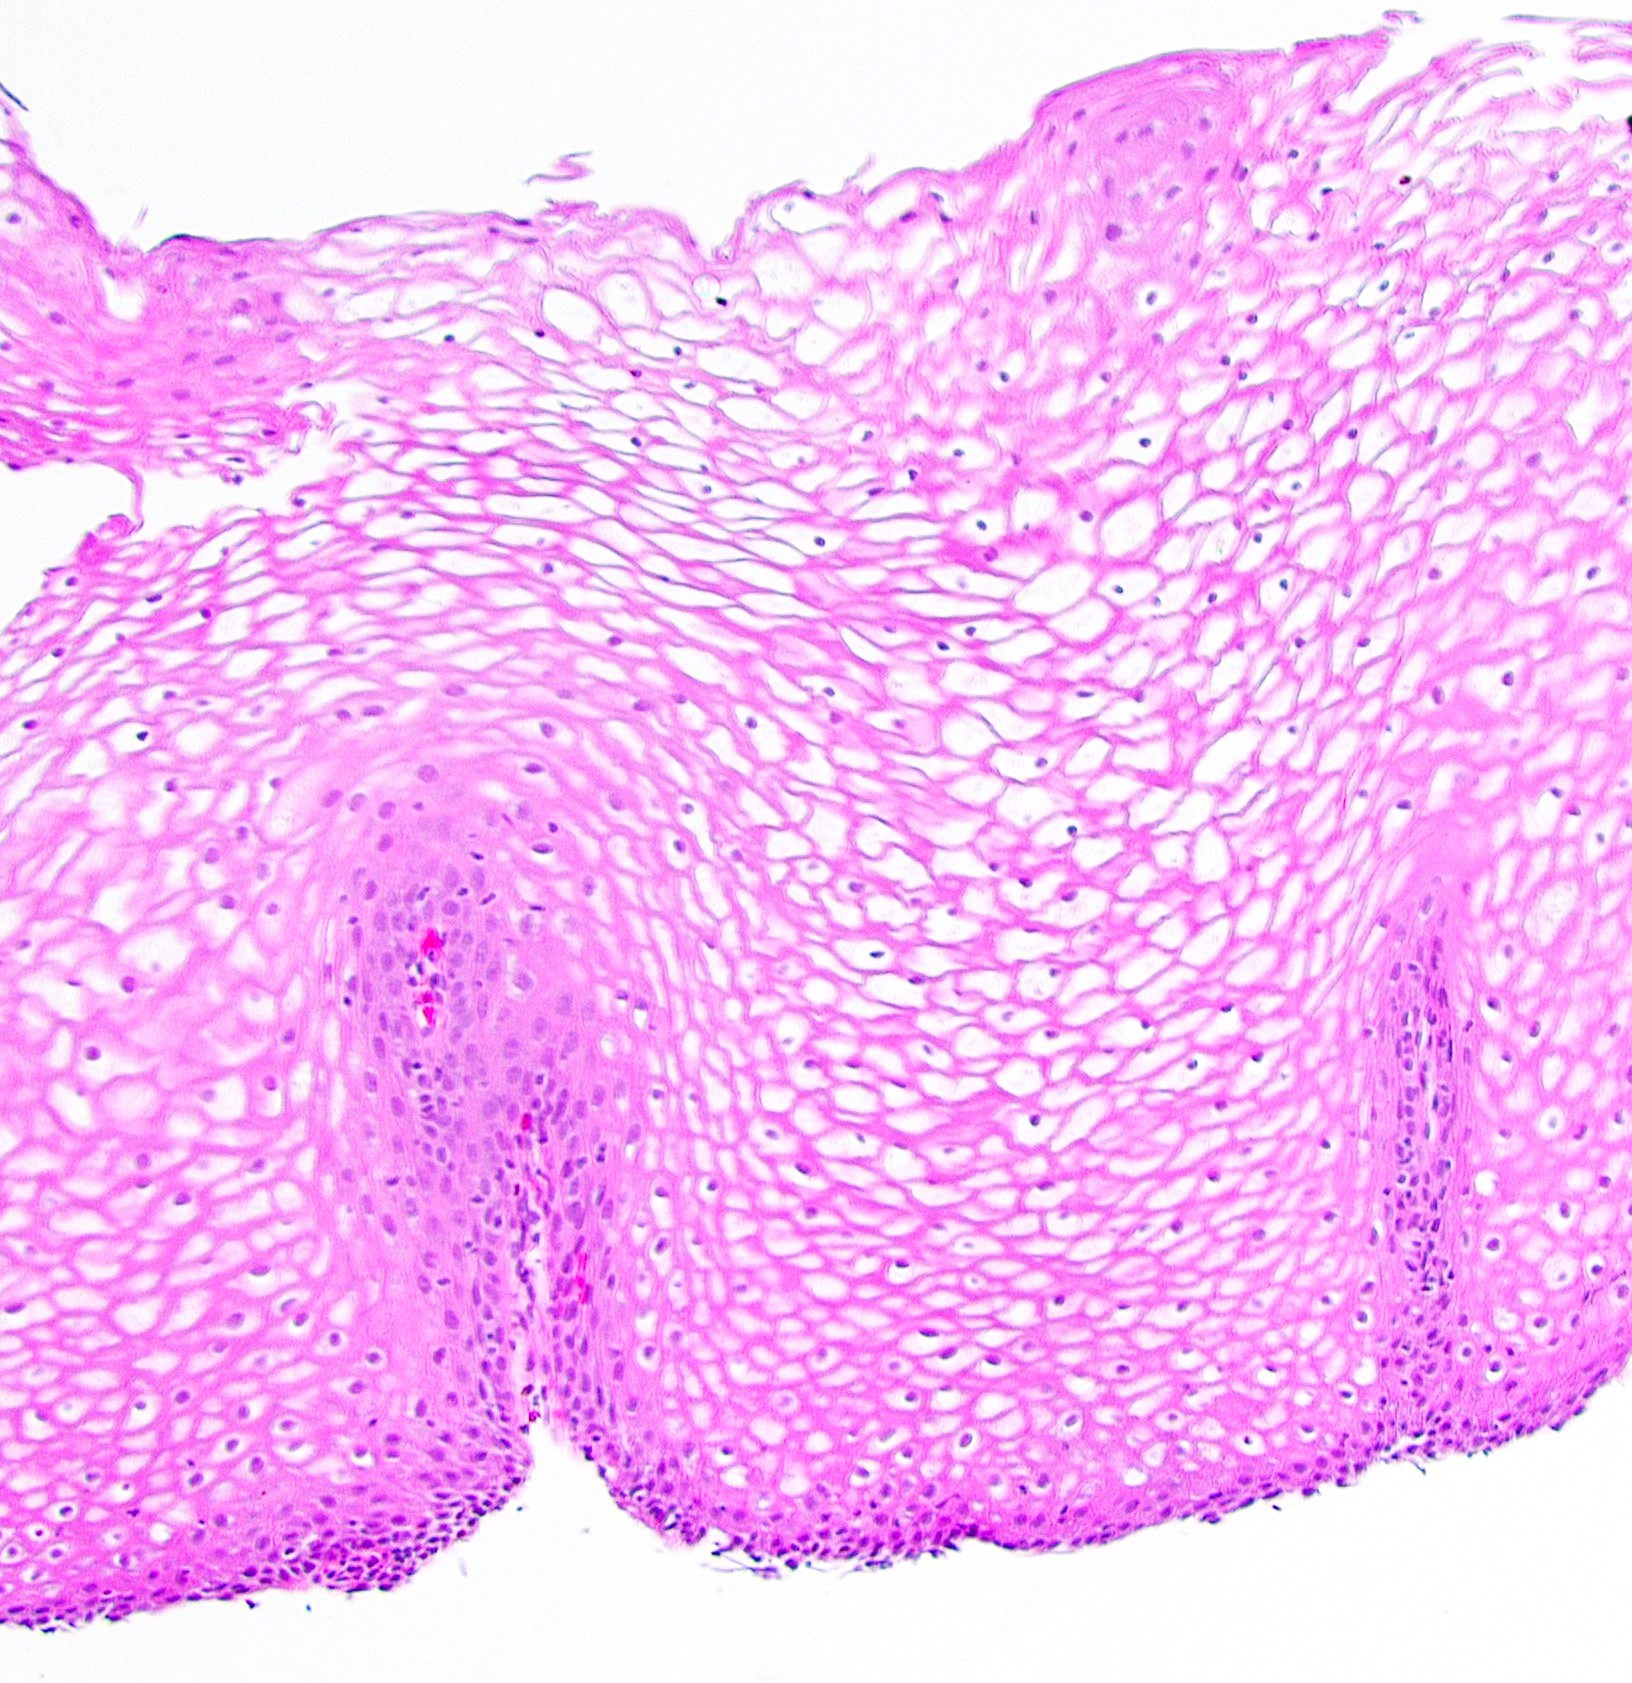 Esophageal squamous mucosa with abundant intracytoplasmic glycogen